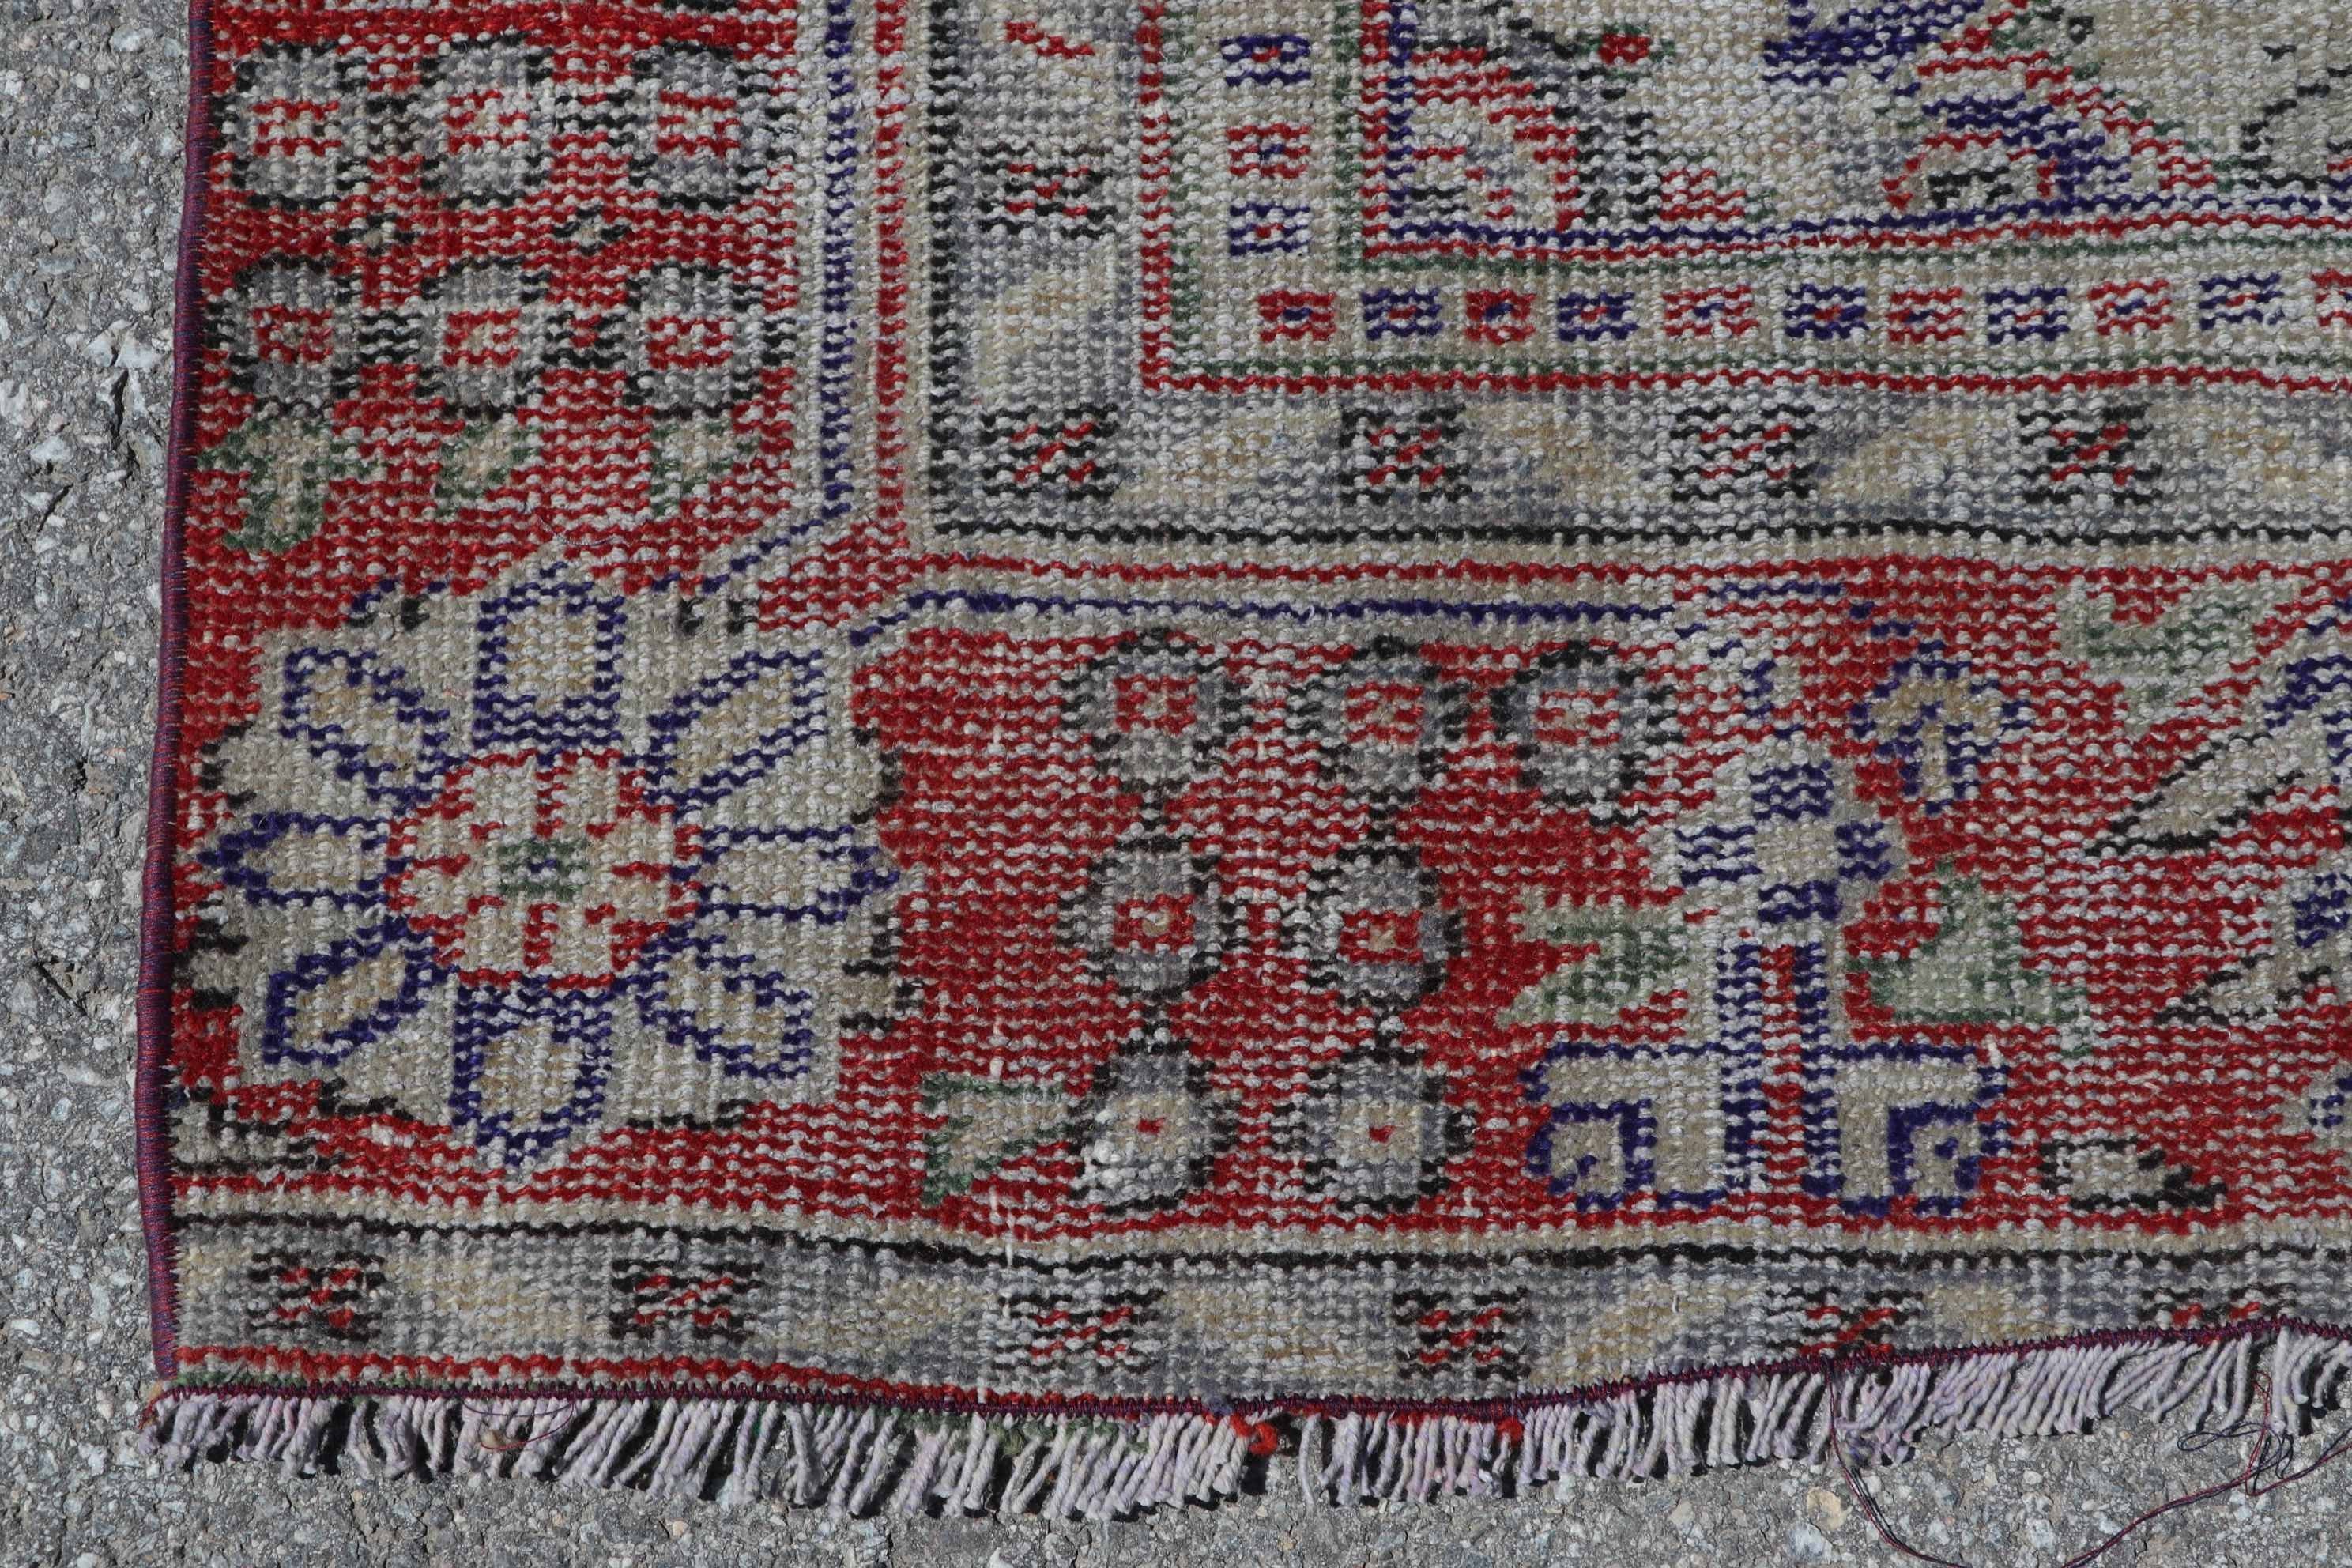 Saloon Rug, Red Moroccan Rugs, Antique Rug, 6.8x10.5 ft Oversize Rug, Turkish Rug, Vintage Rug, Anatolian Rug, Ethnic Rug, Dining Room Rug